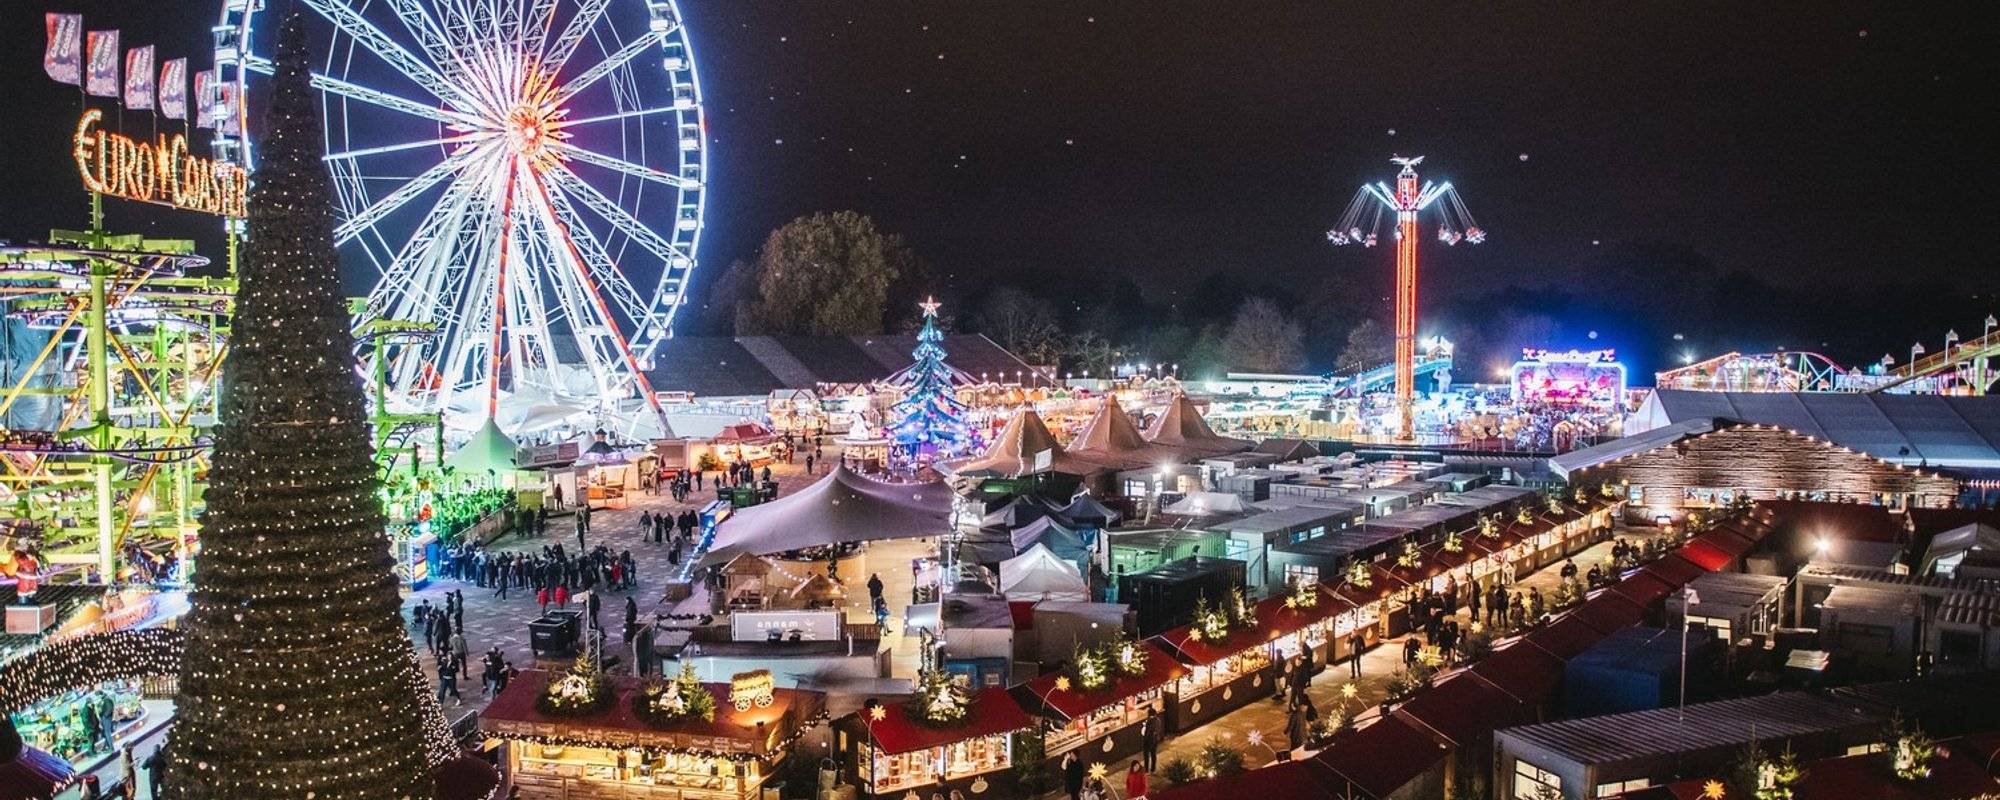 Christmas markets in London in 2018